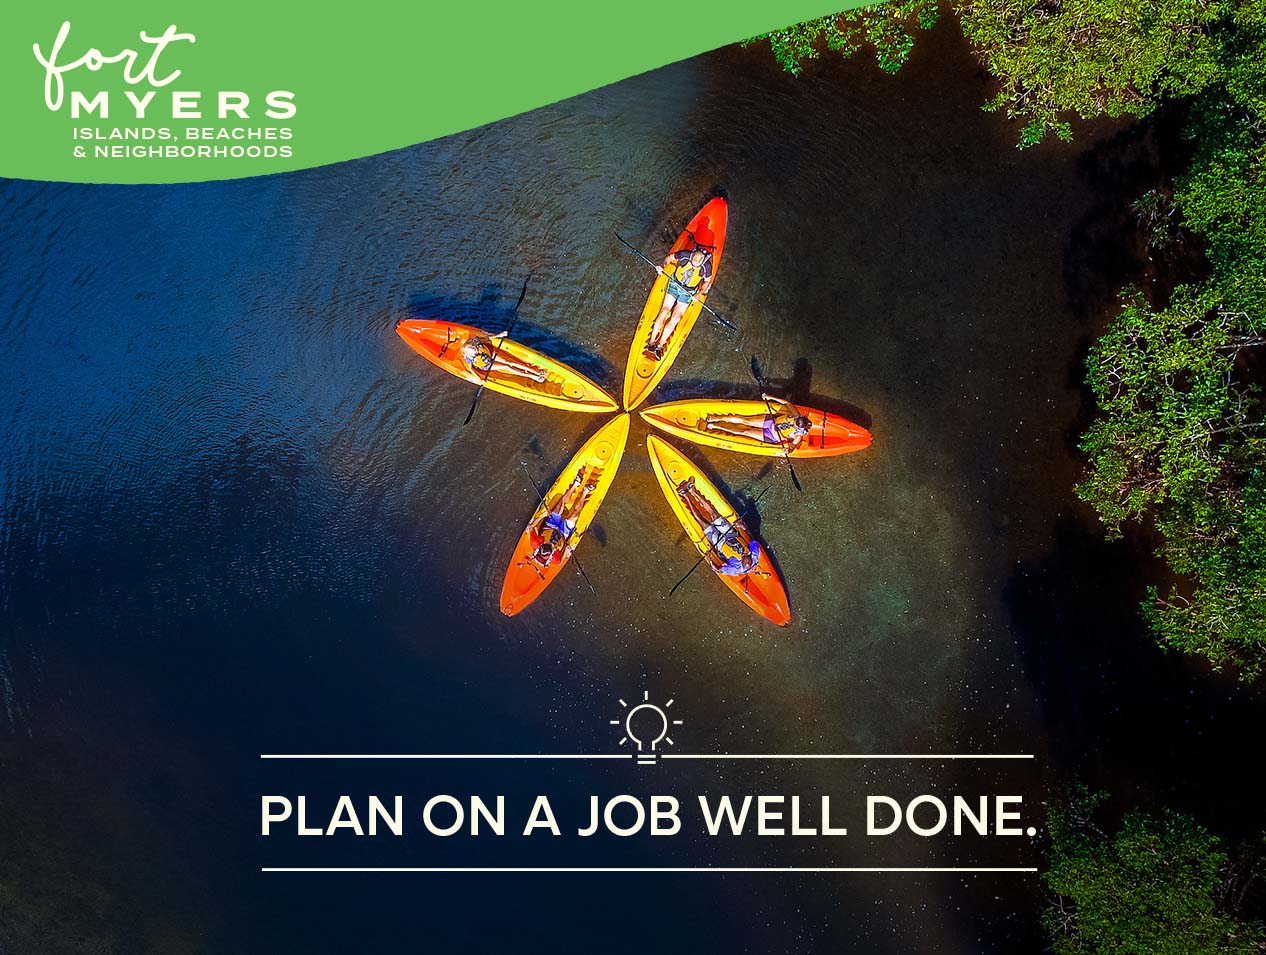 Fort Myers Islands, Beaches & Neighborhoods - Plan on a job well done.